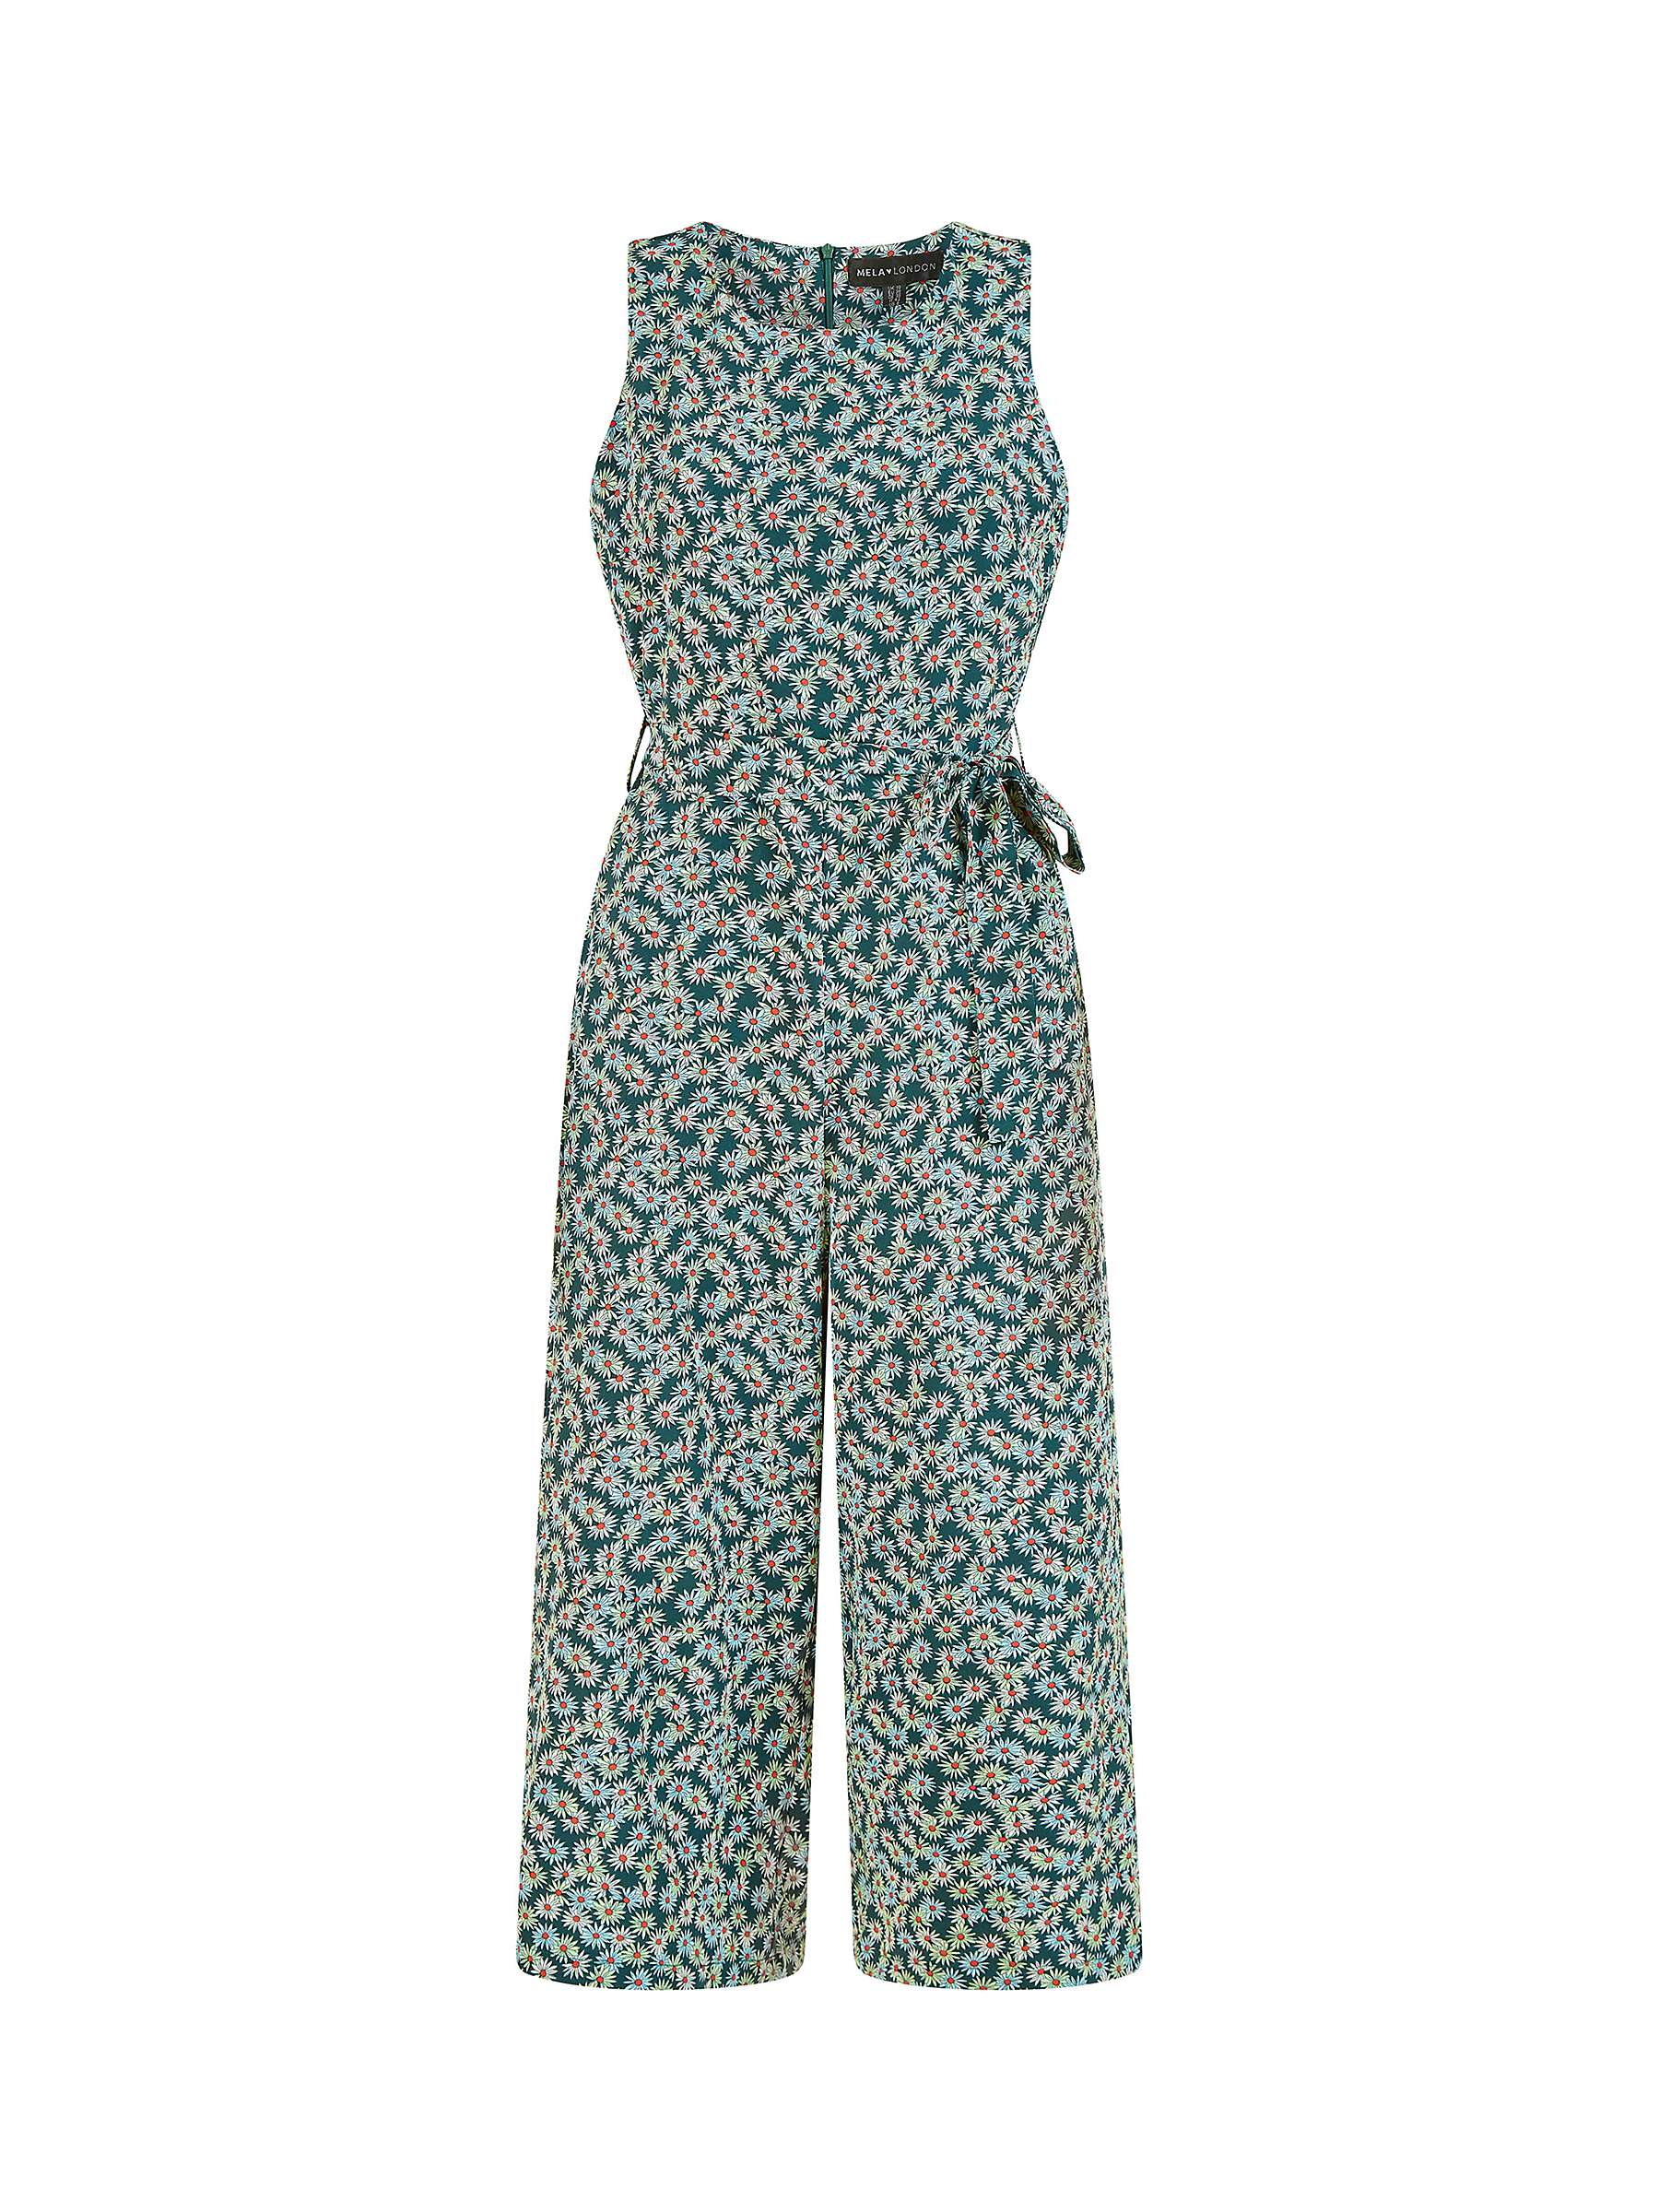 Buy Mela London Daisy Print Culotte Jumpsuit, Green Online at johnlewis.com